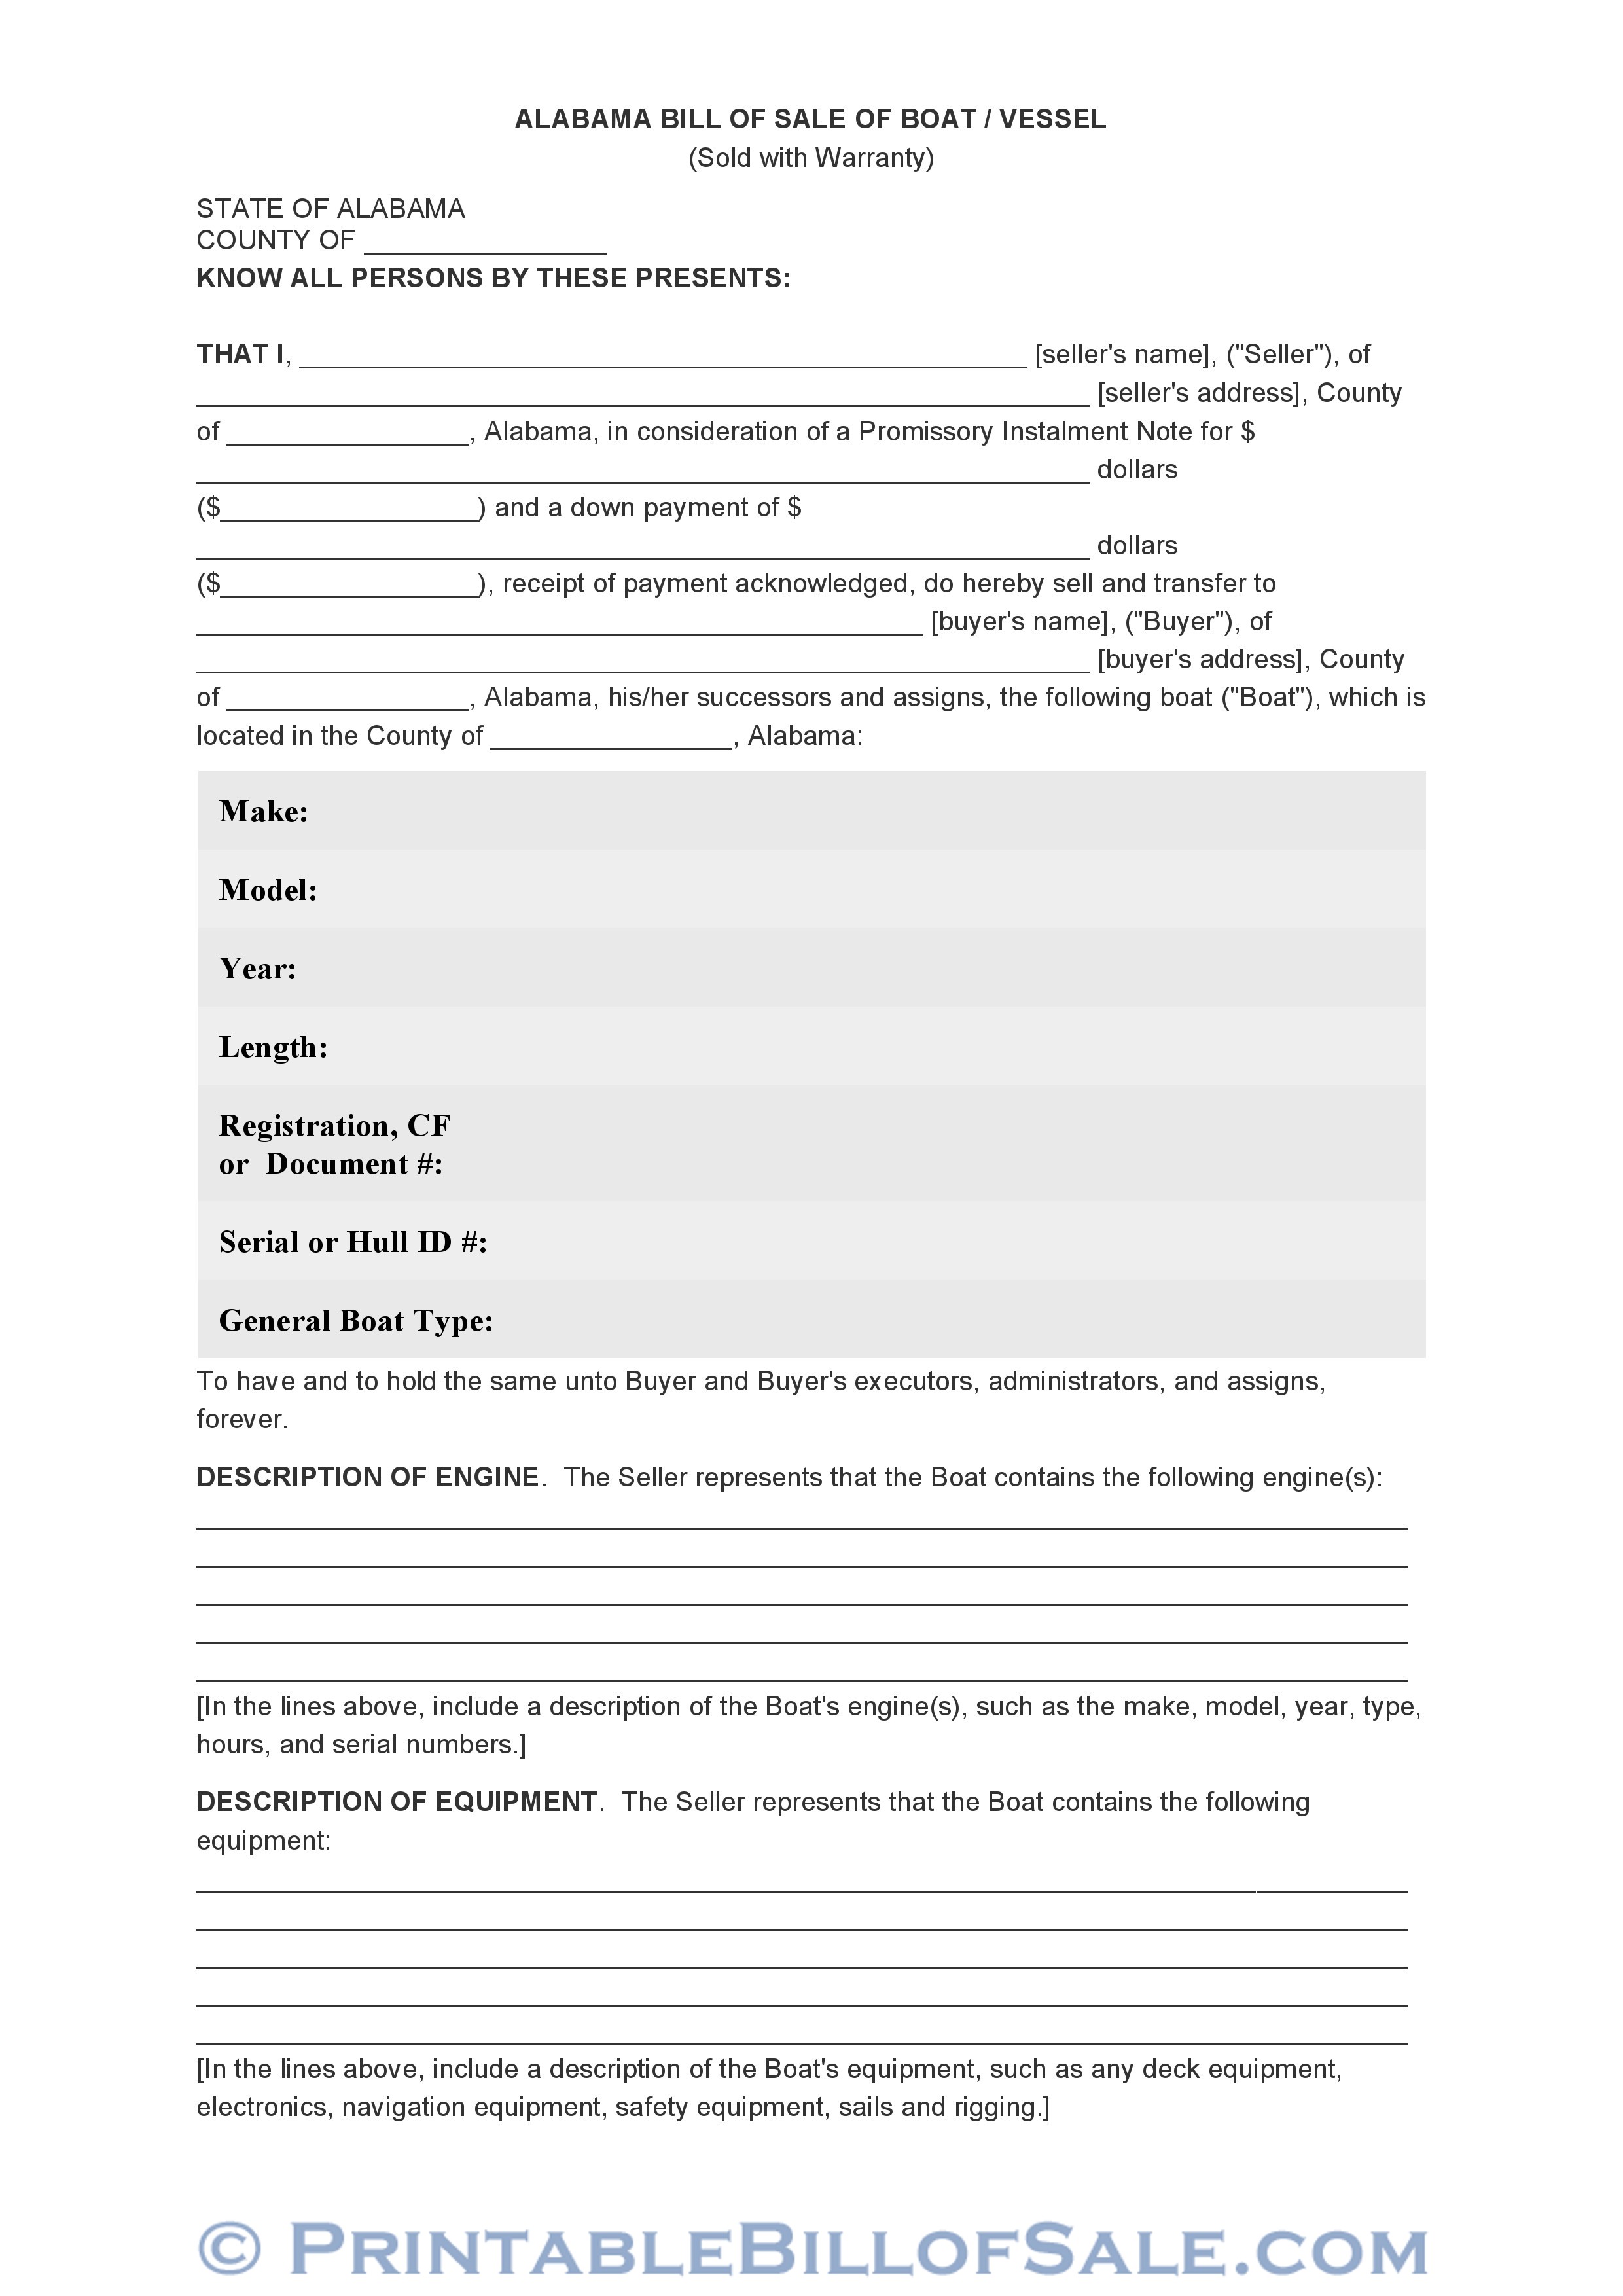 Free Alabama Bill Of Sale Of Boat / Vessel Form Download PDF DOC